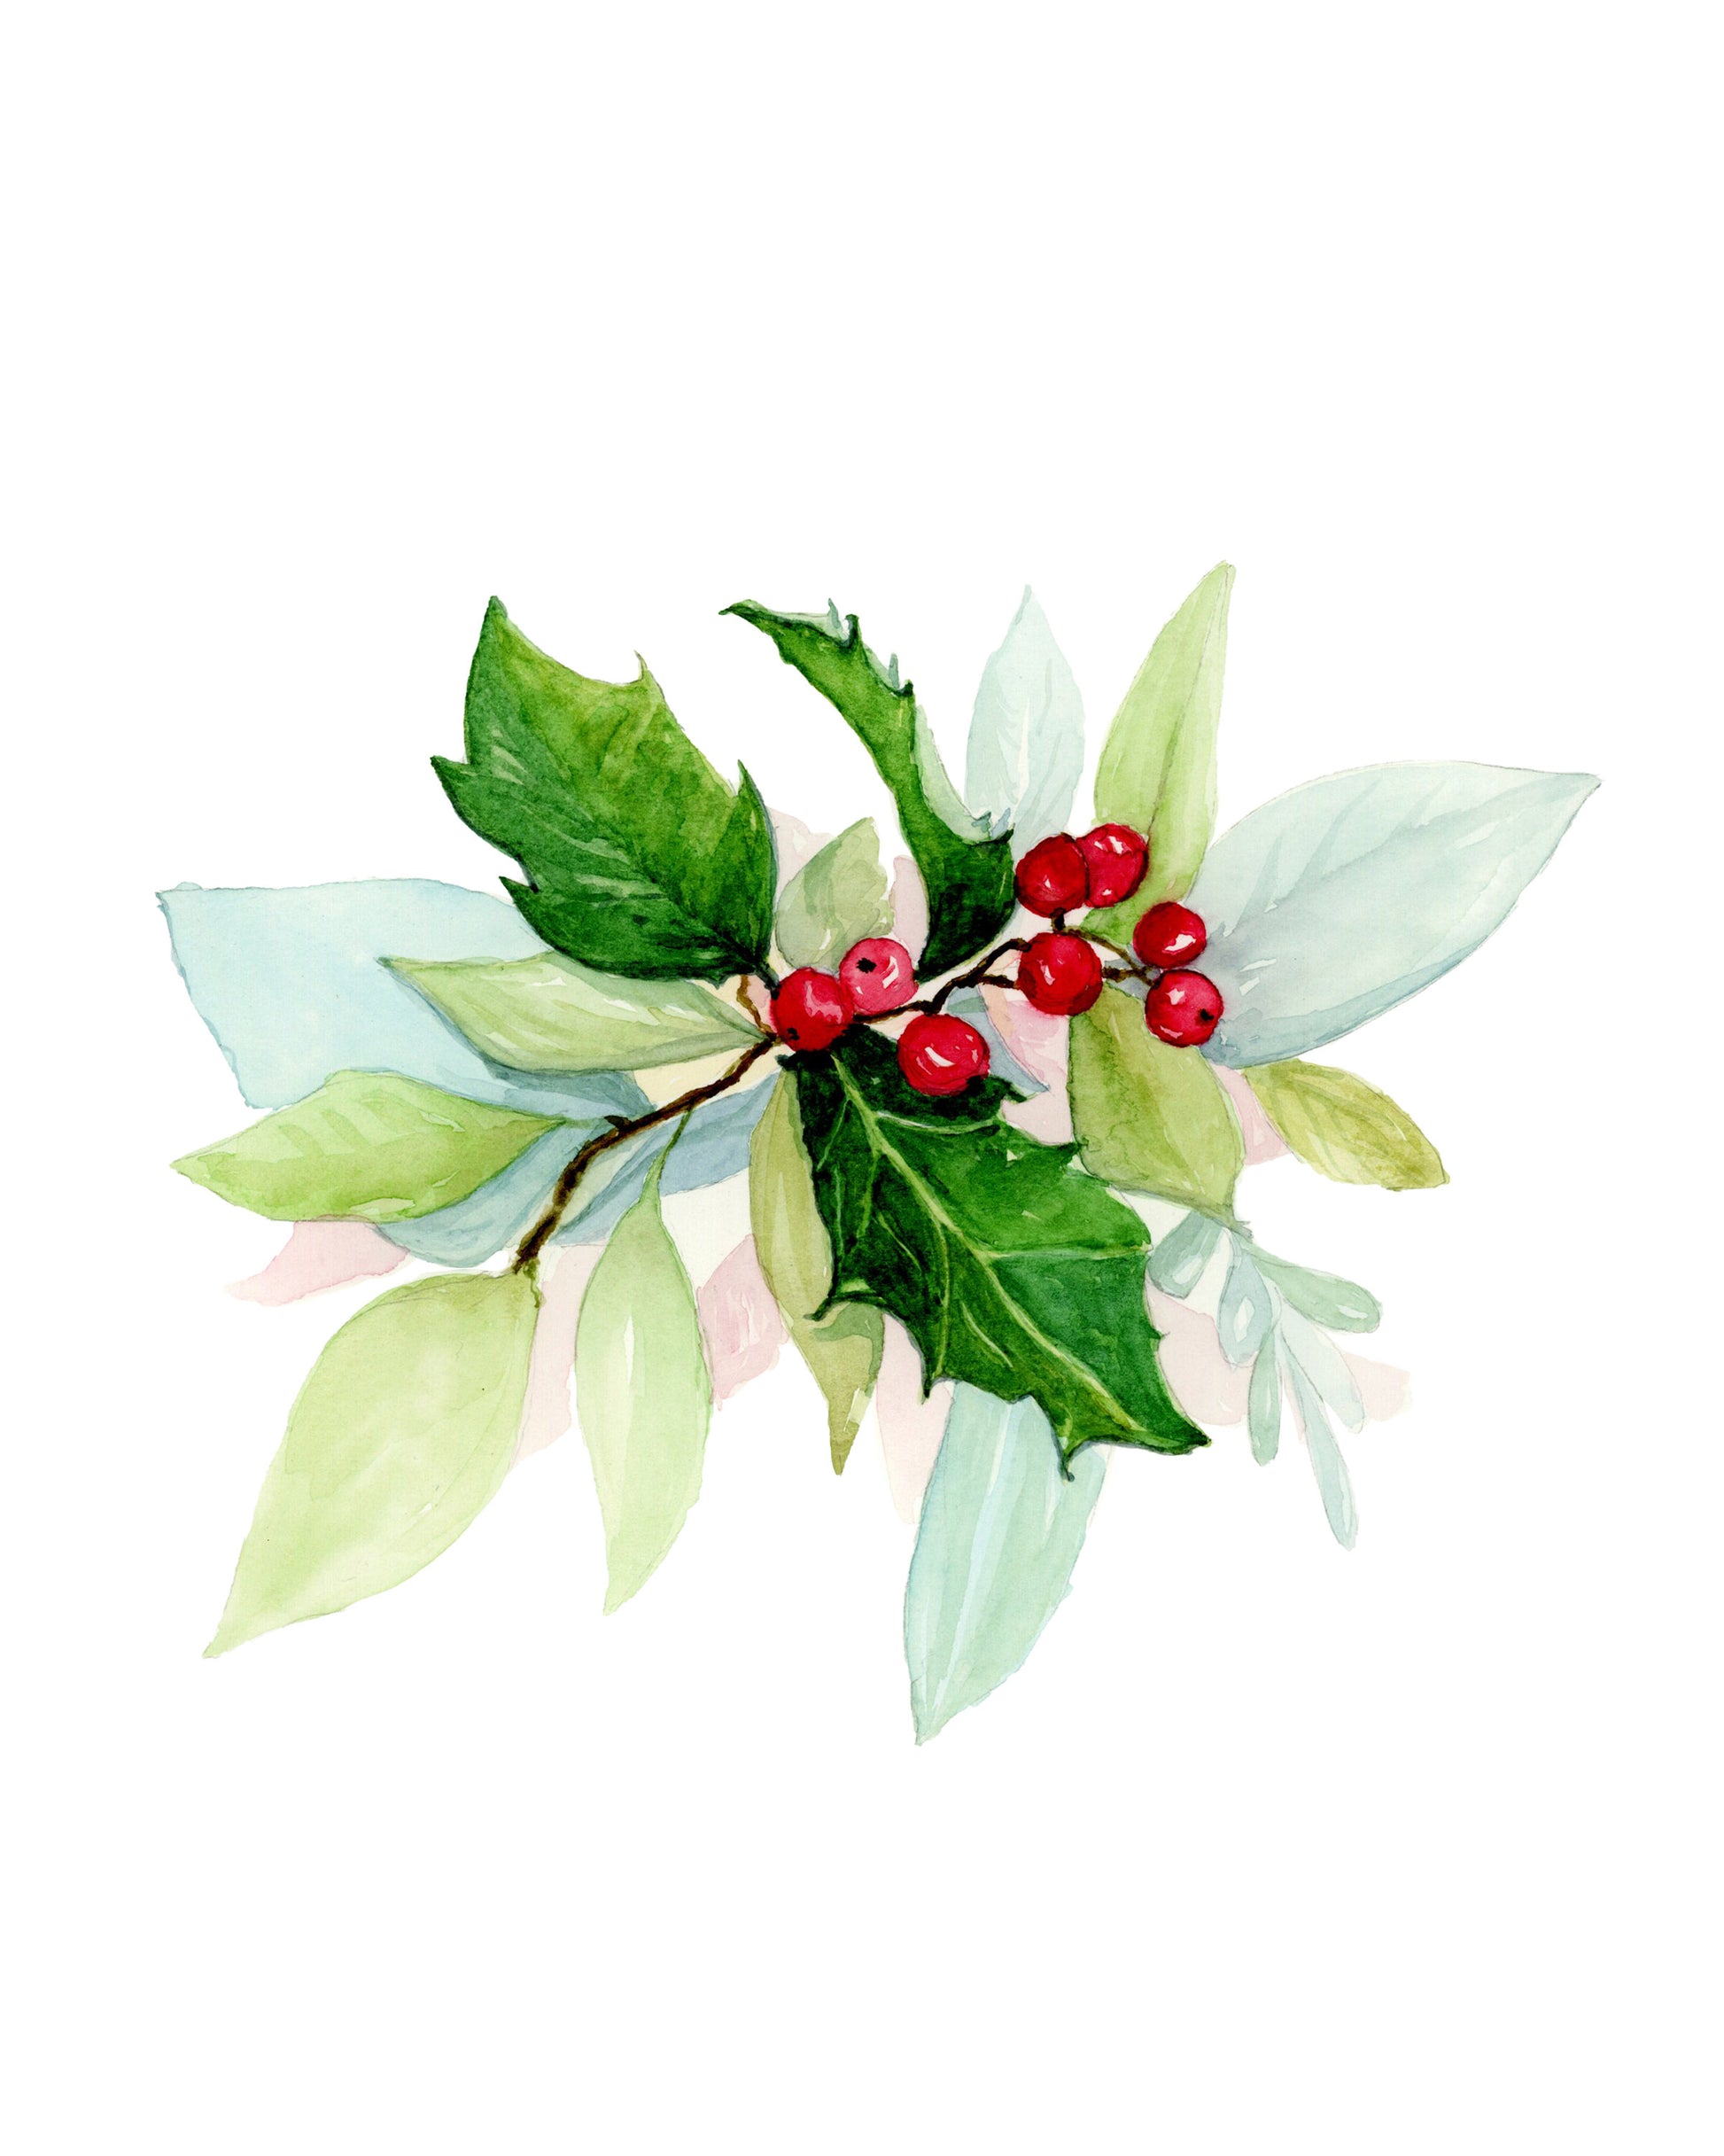 CHRISTMAS - Holly Berries on Wood Block 5x5 or 8x8. Original